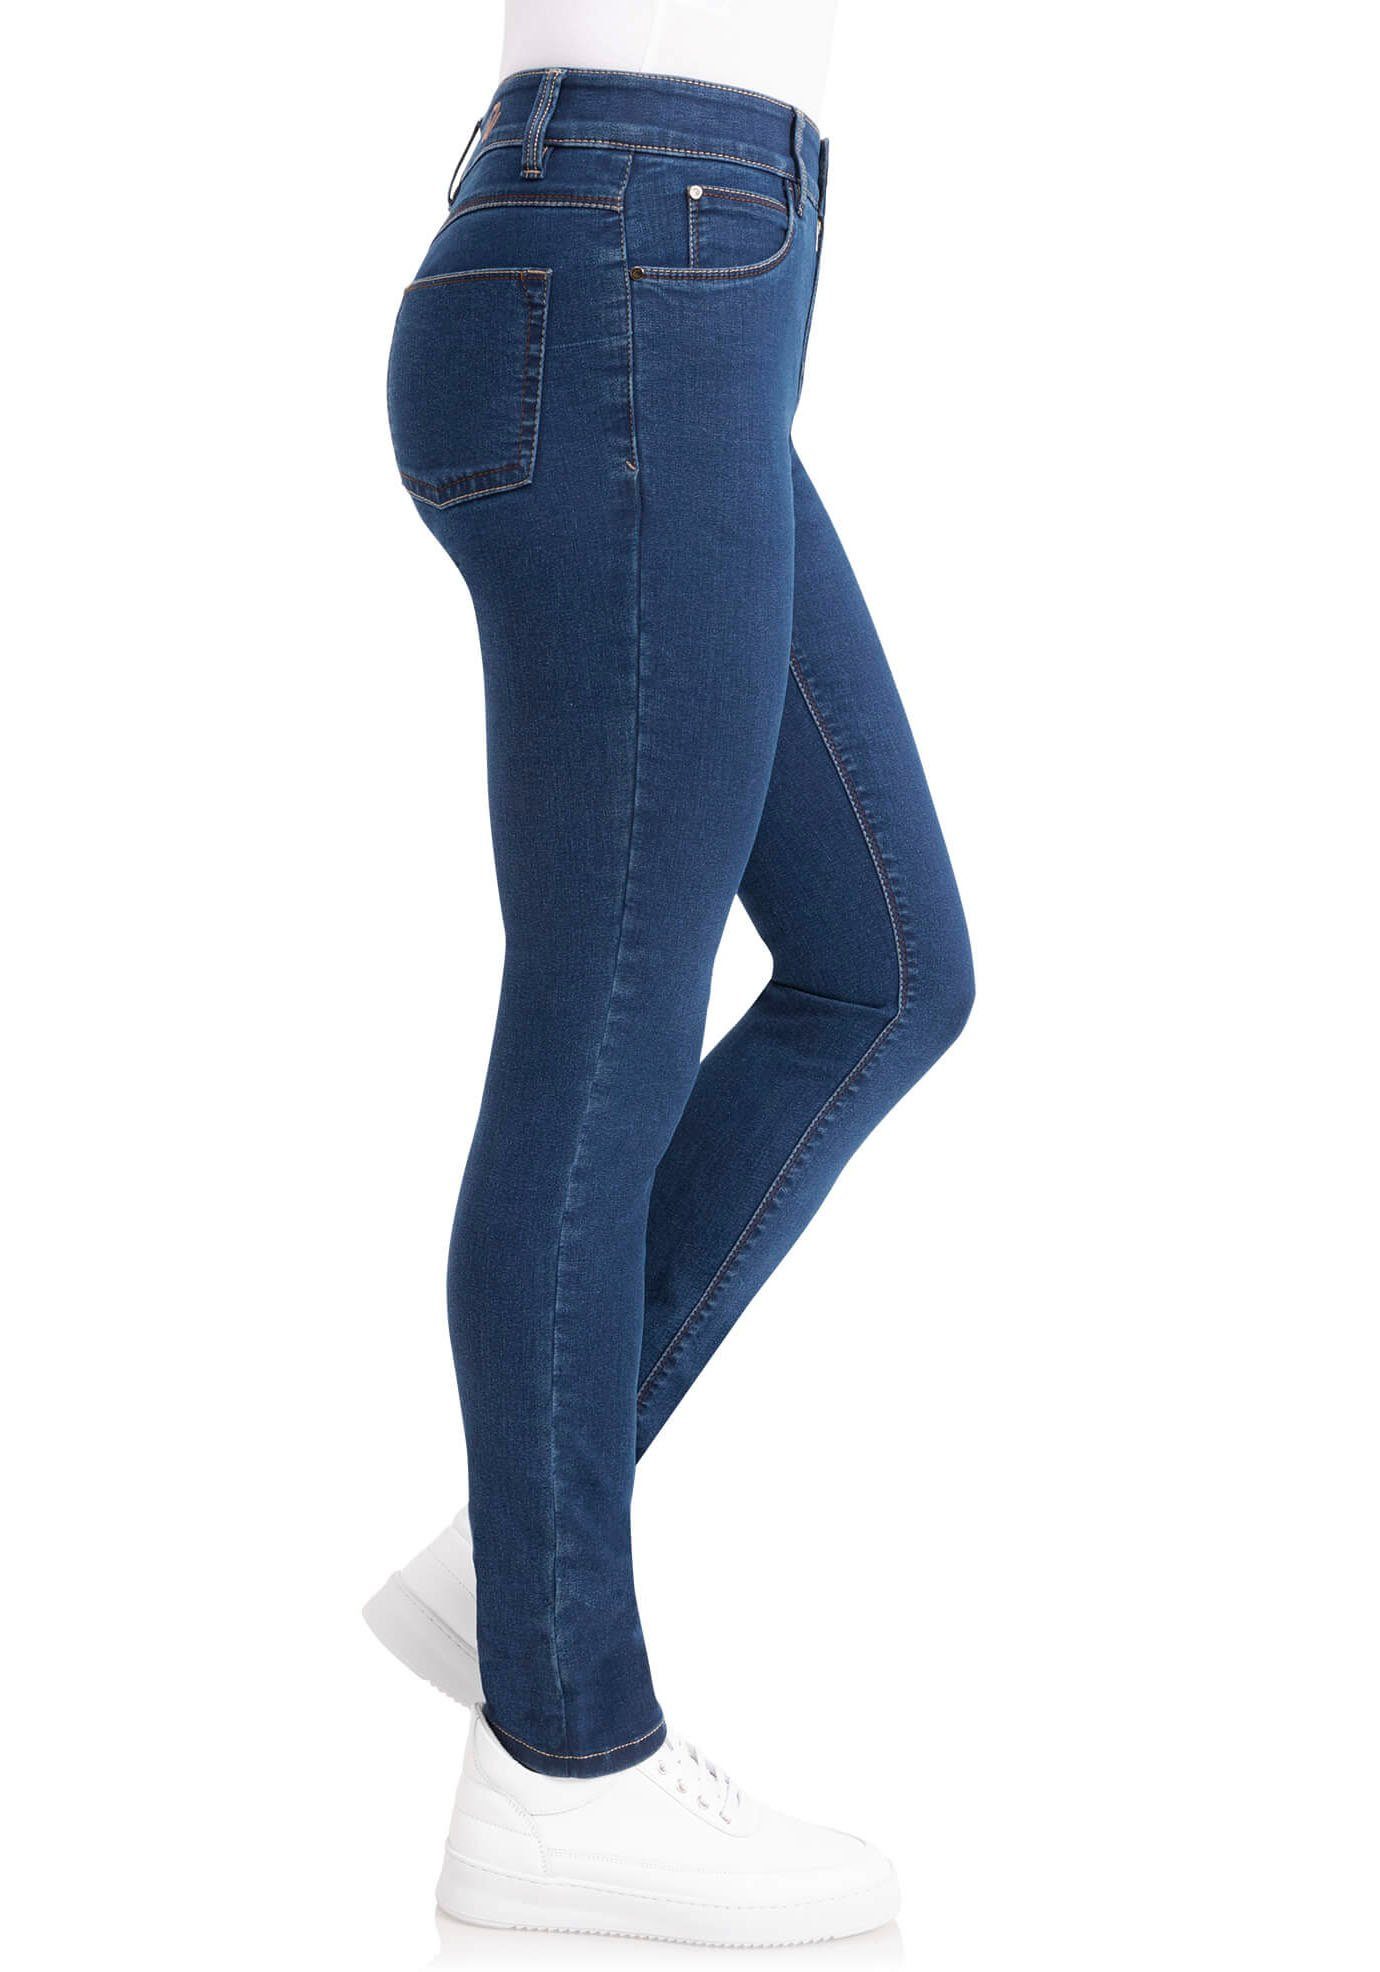 wonderjeans Slim-fit-Jeans stone blue Classic-Slim Klassischer gerader Schnitt washed